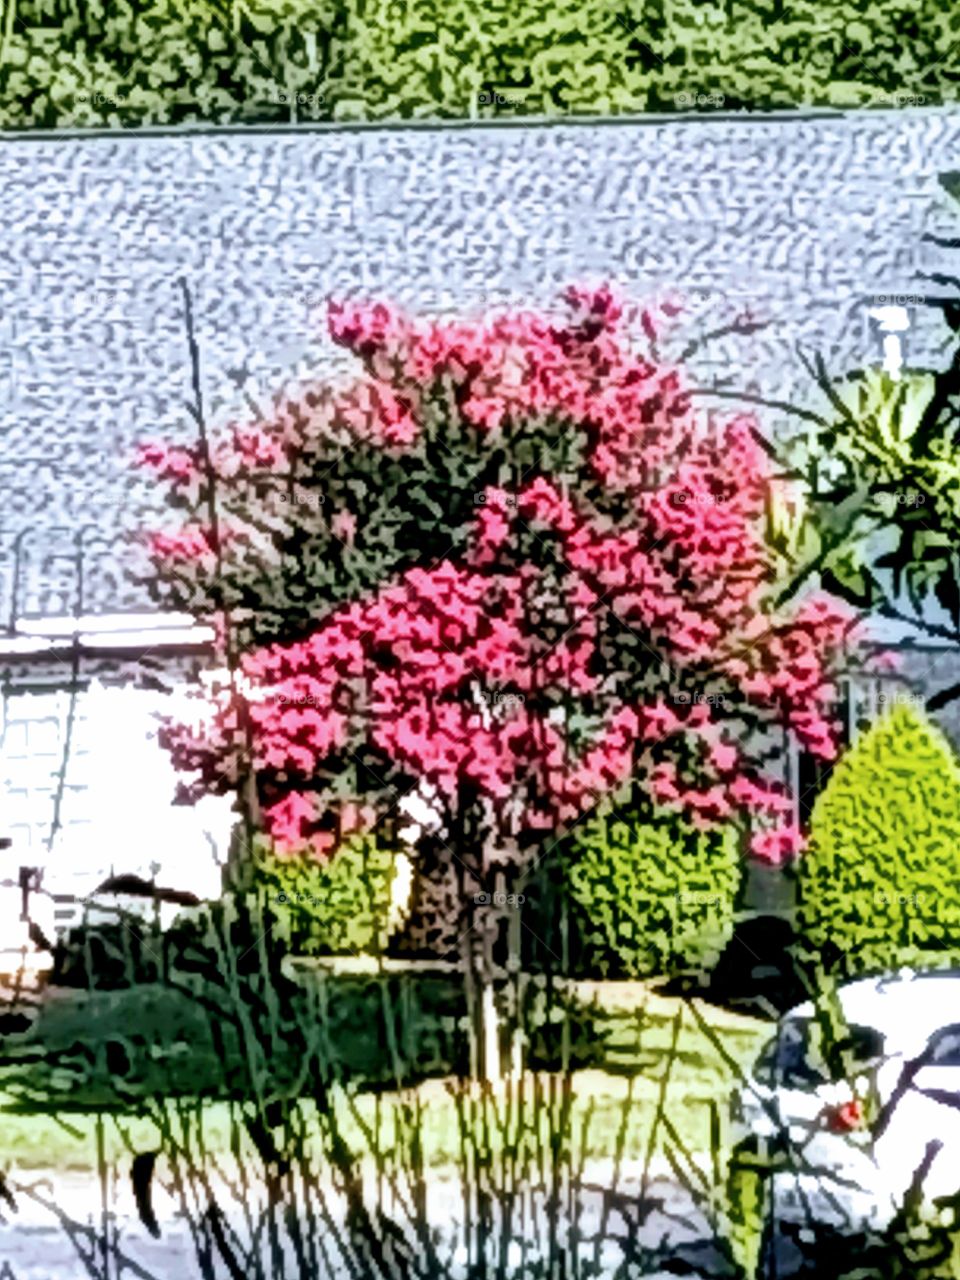 flower tree